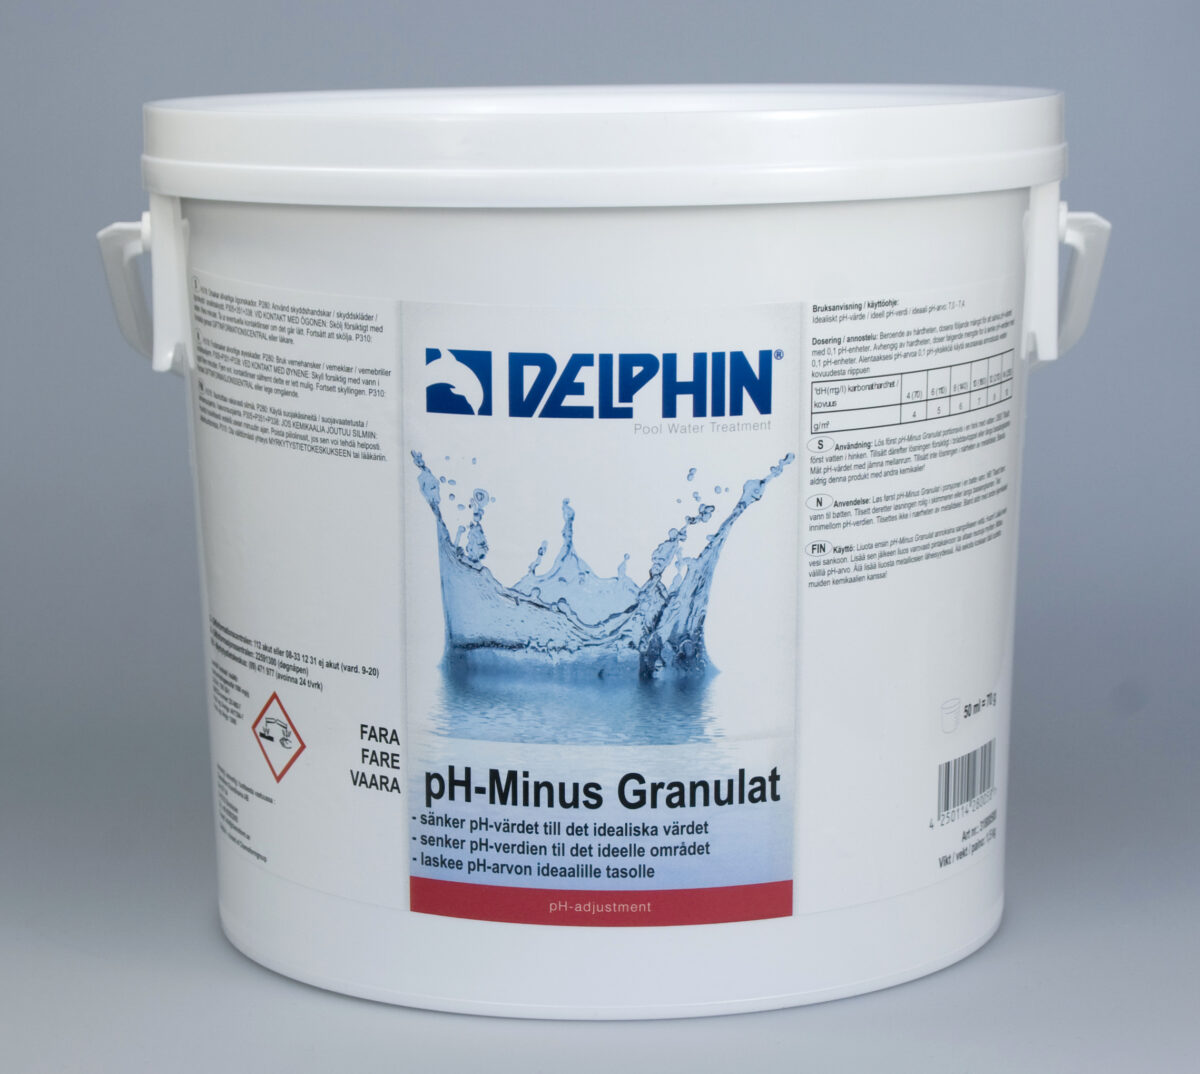 DELPHIN pH-minus Granulat